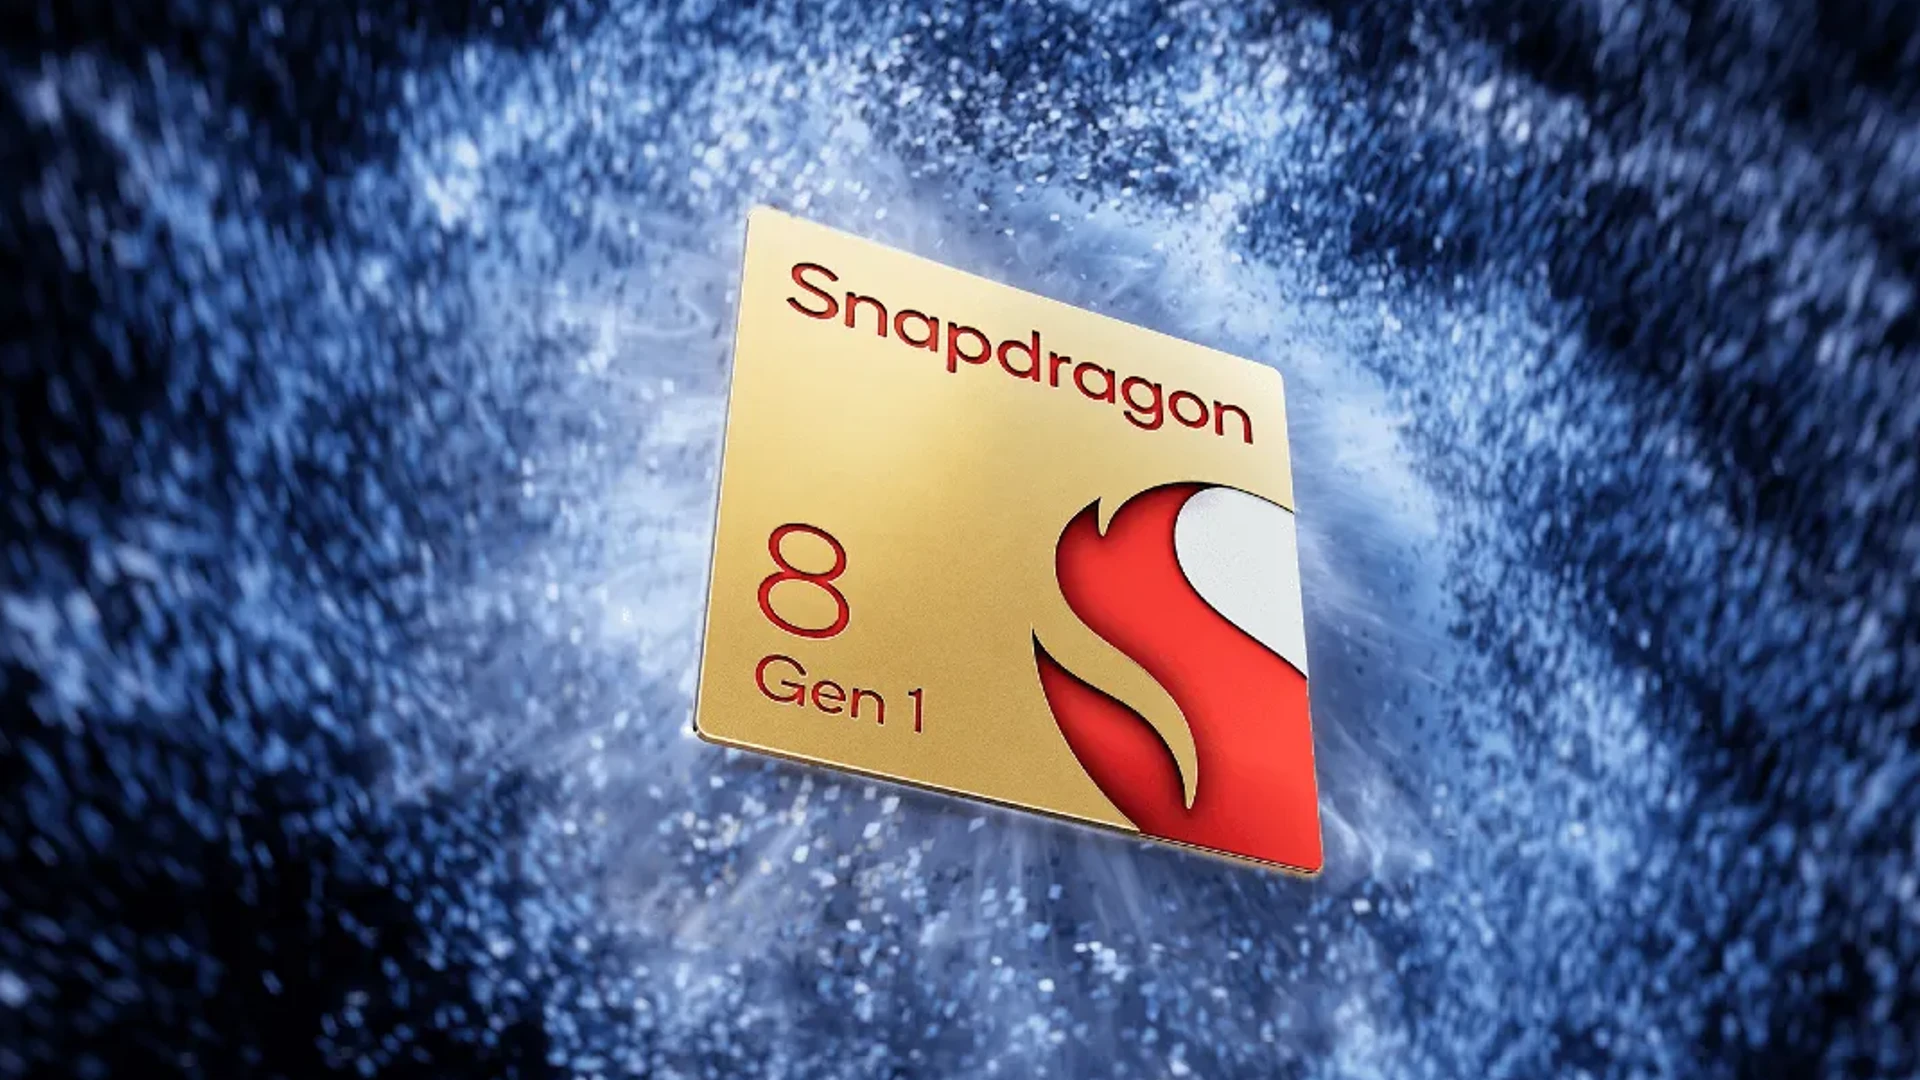 Snapdragon 8 Gen 1+ Postponed to the second half of 2022